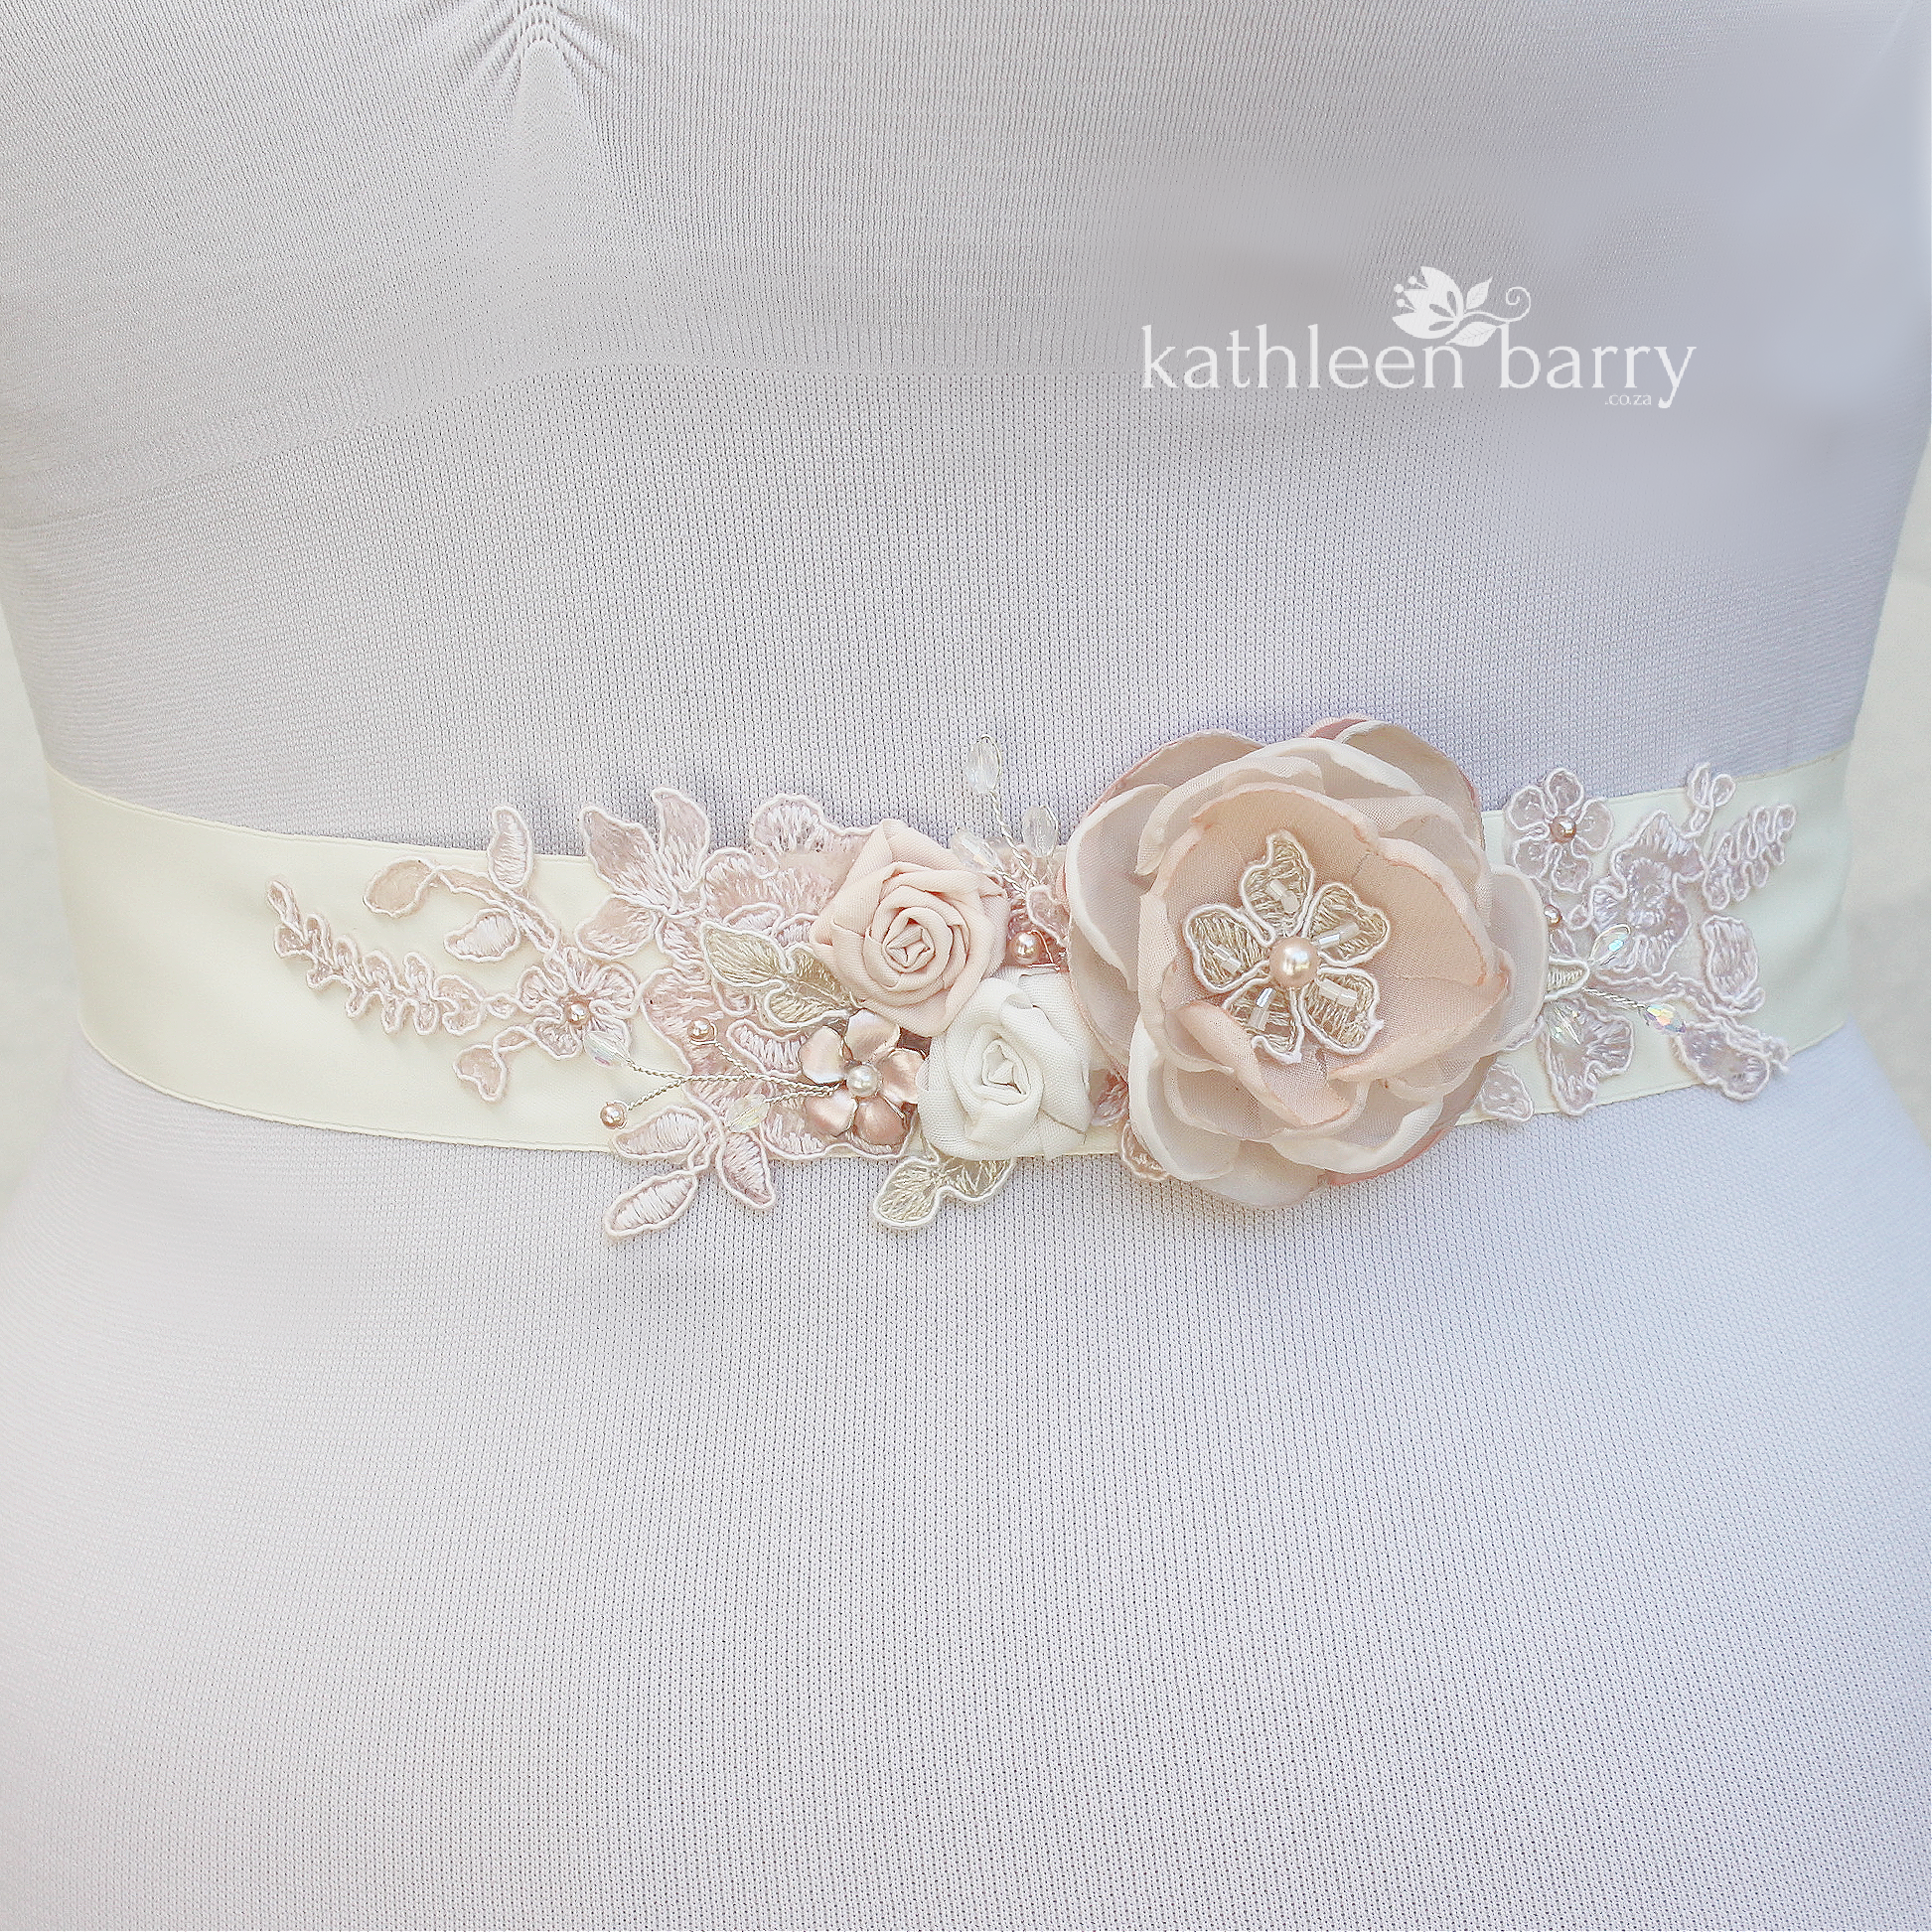 Wedding dress sash belt floral with lace - Blush pink - soft pink colors to order online